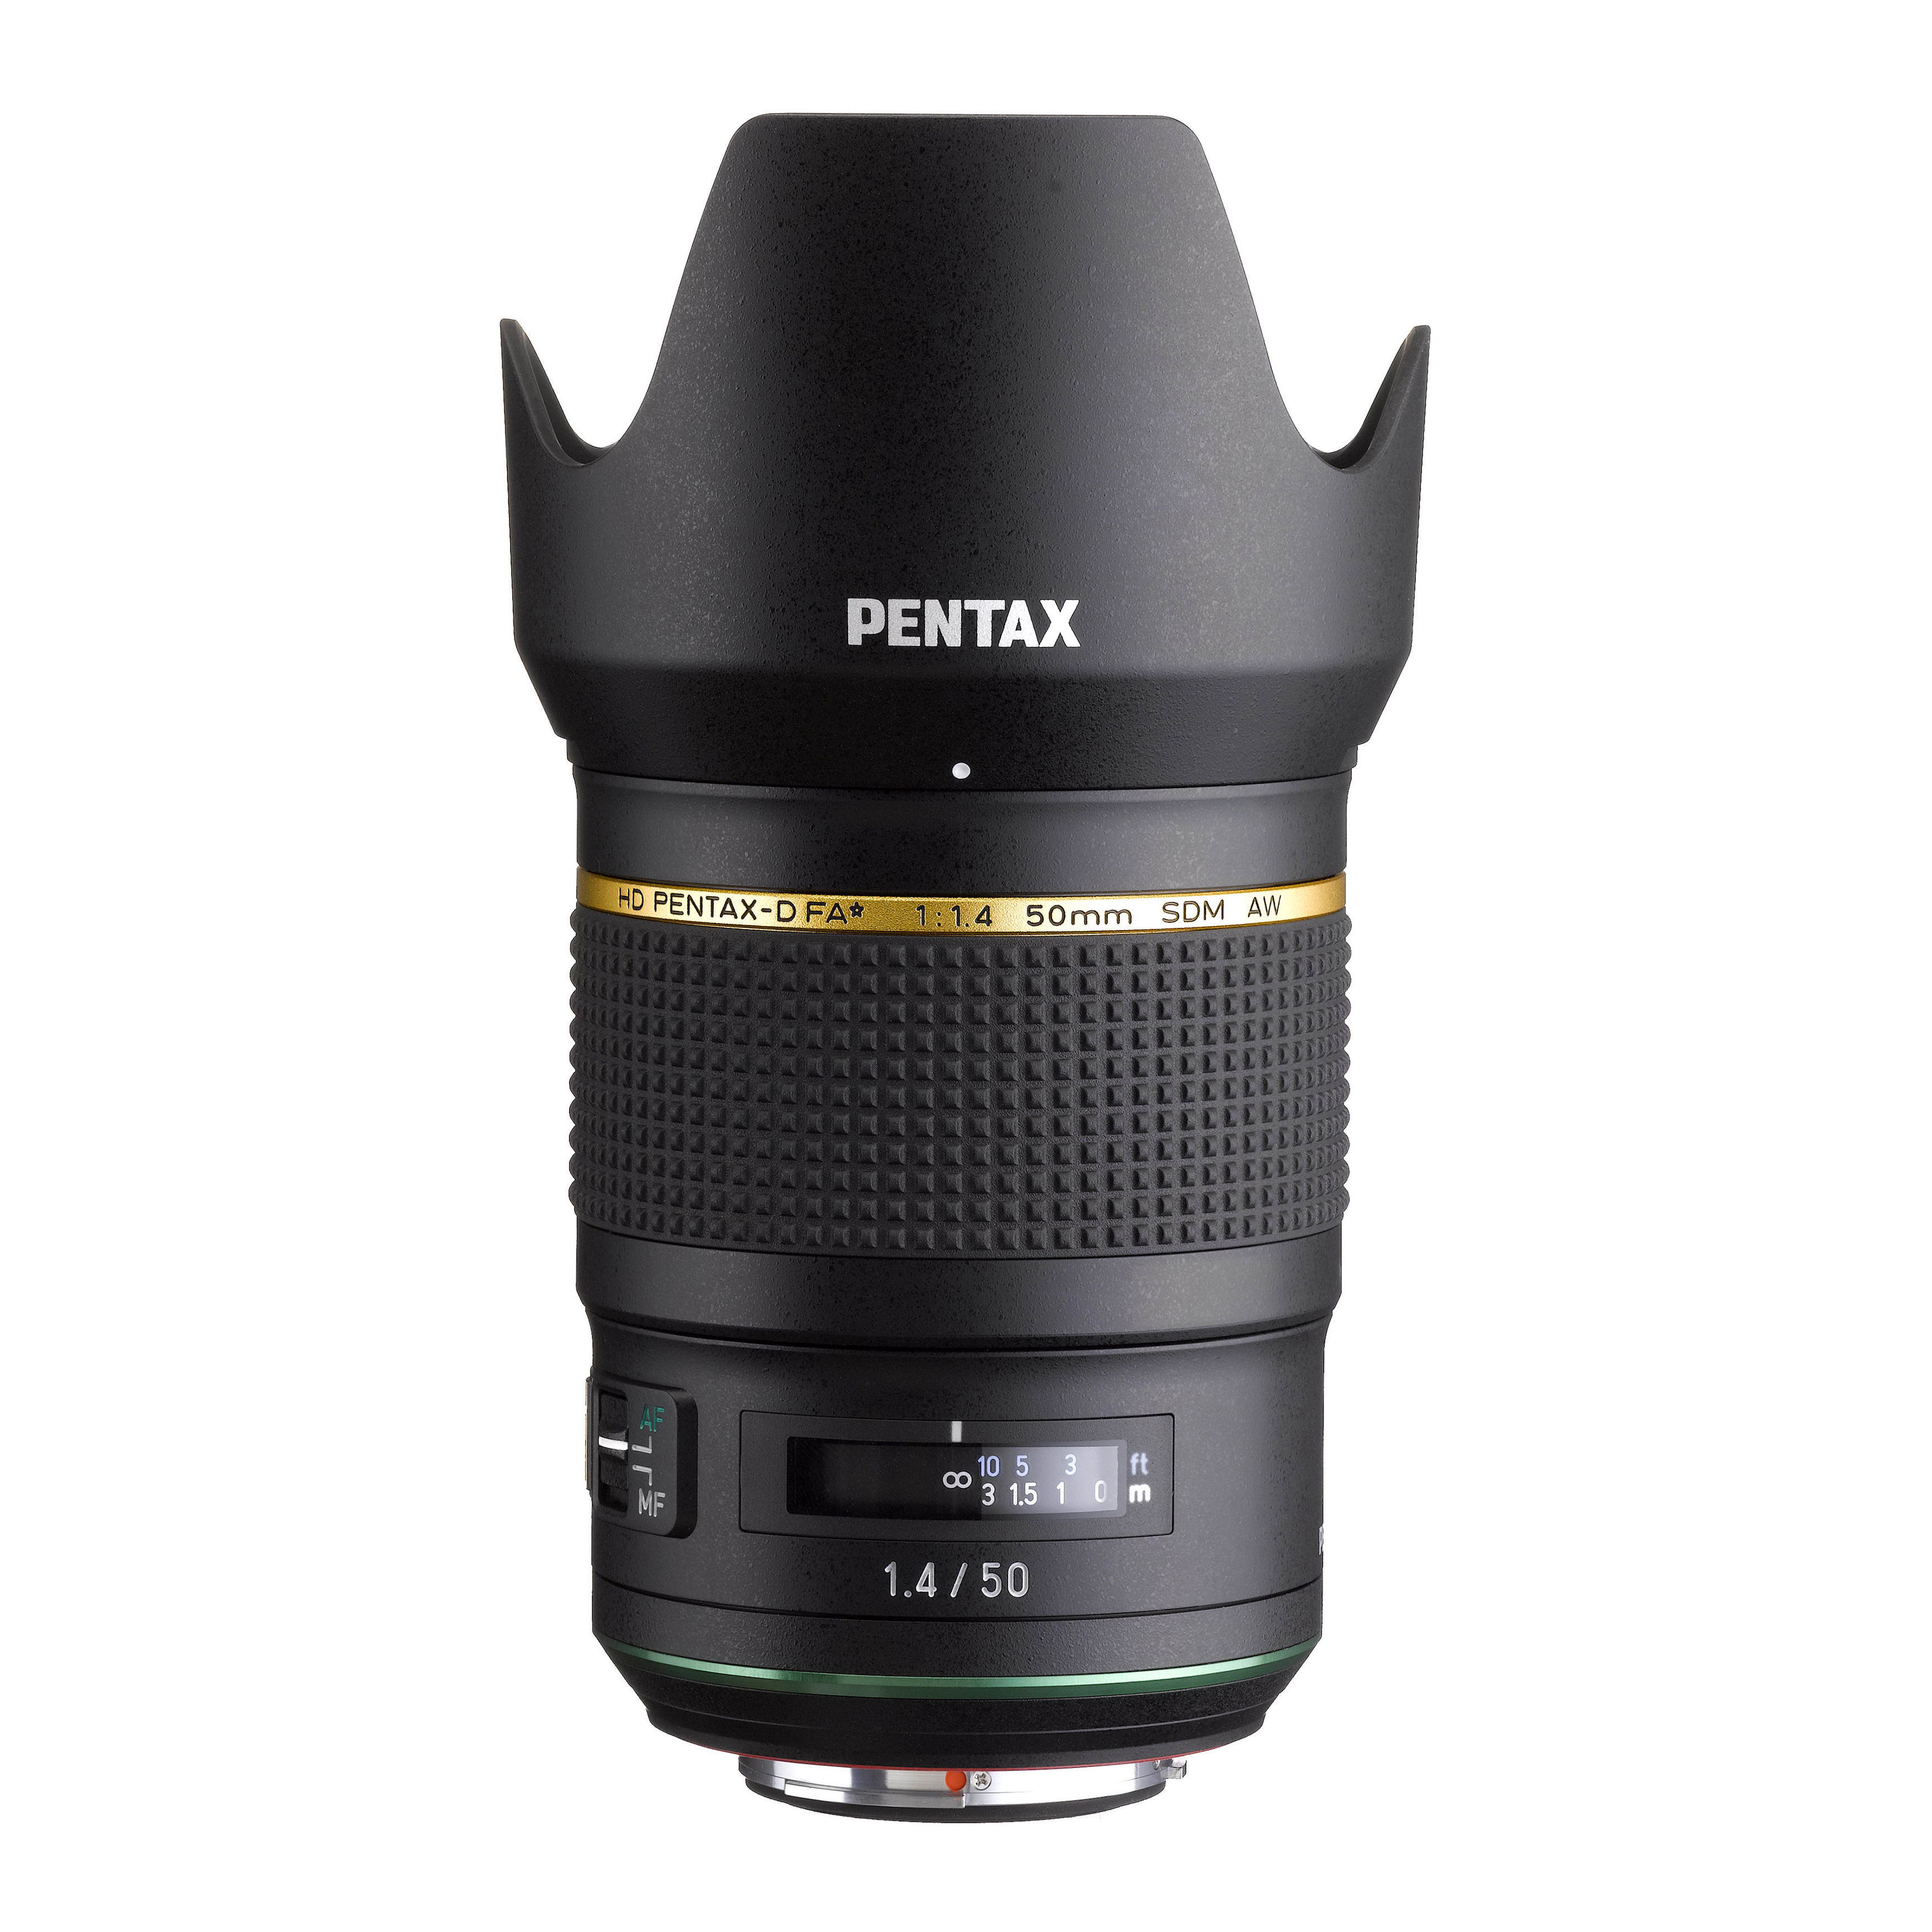 Pentax-D Fa* HD 50mm f/1.4 SDM AW Lens